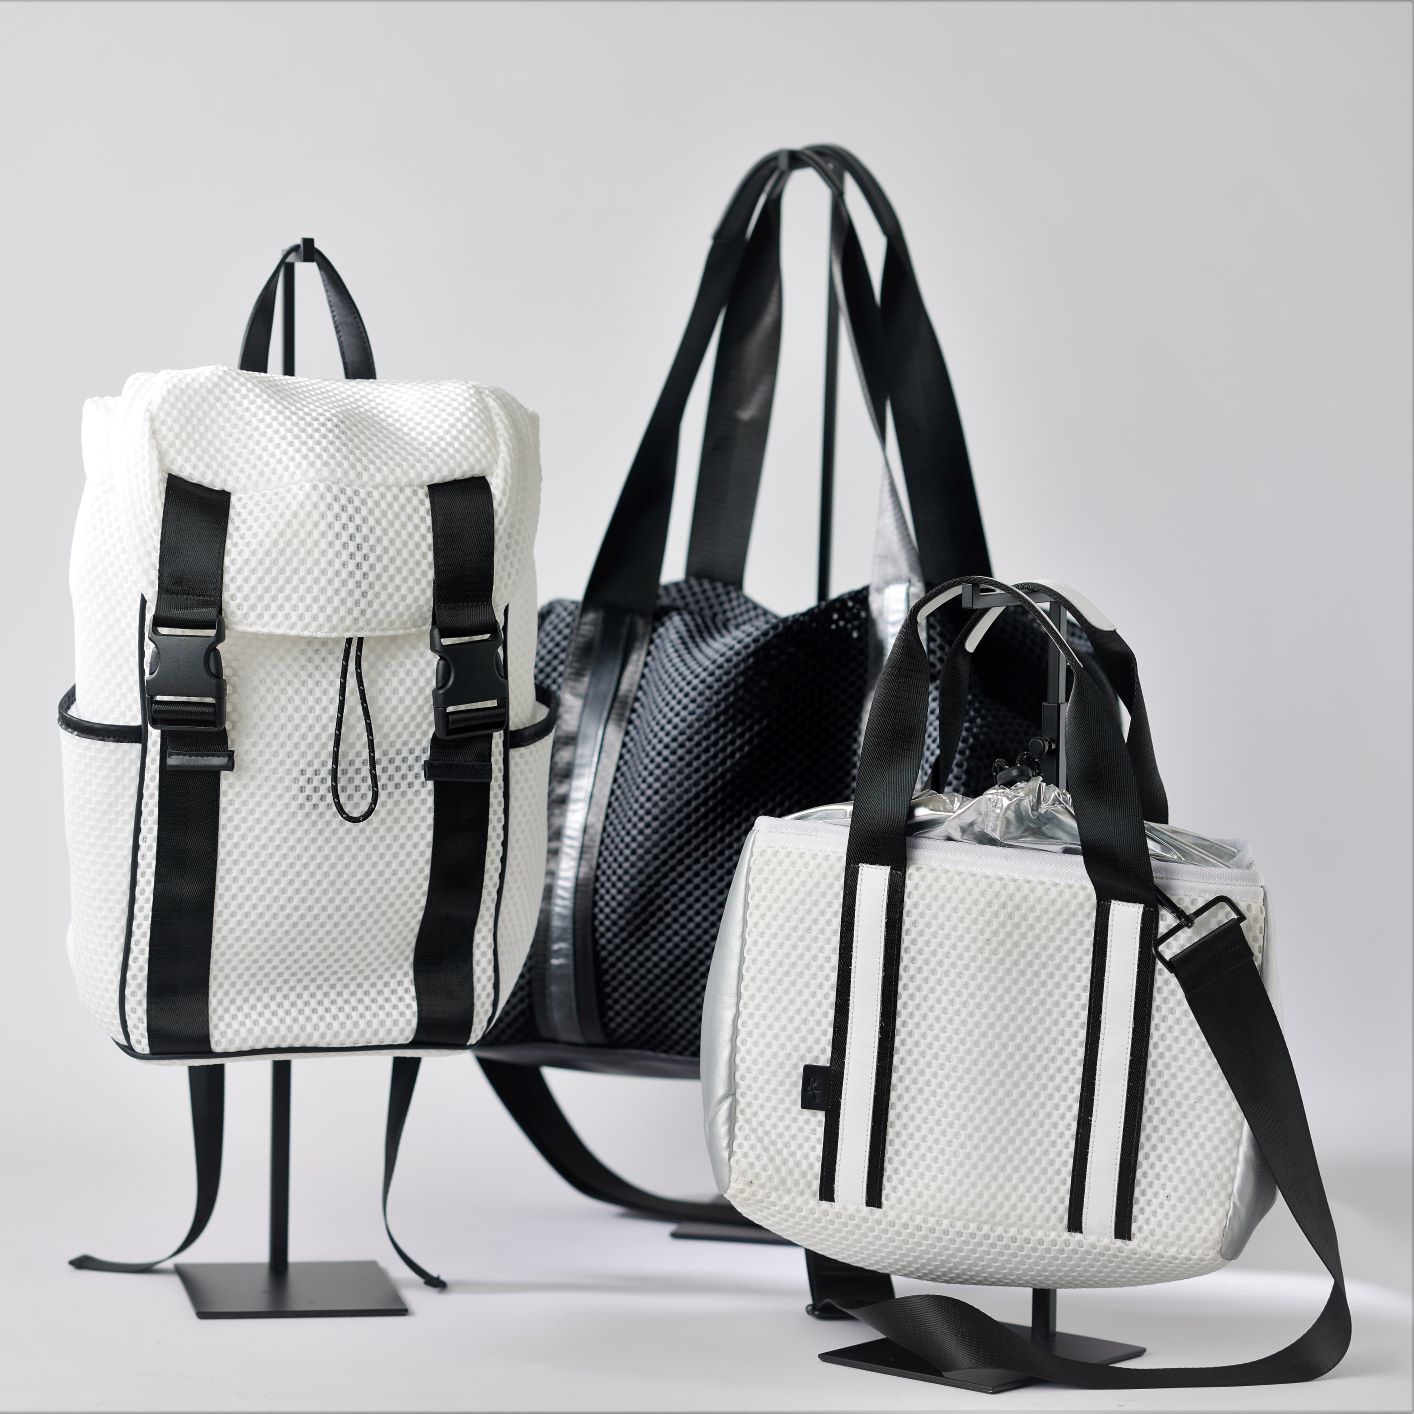 Collection of Anya & Niki active mesh bags and backpacks.